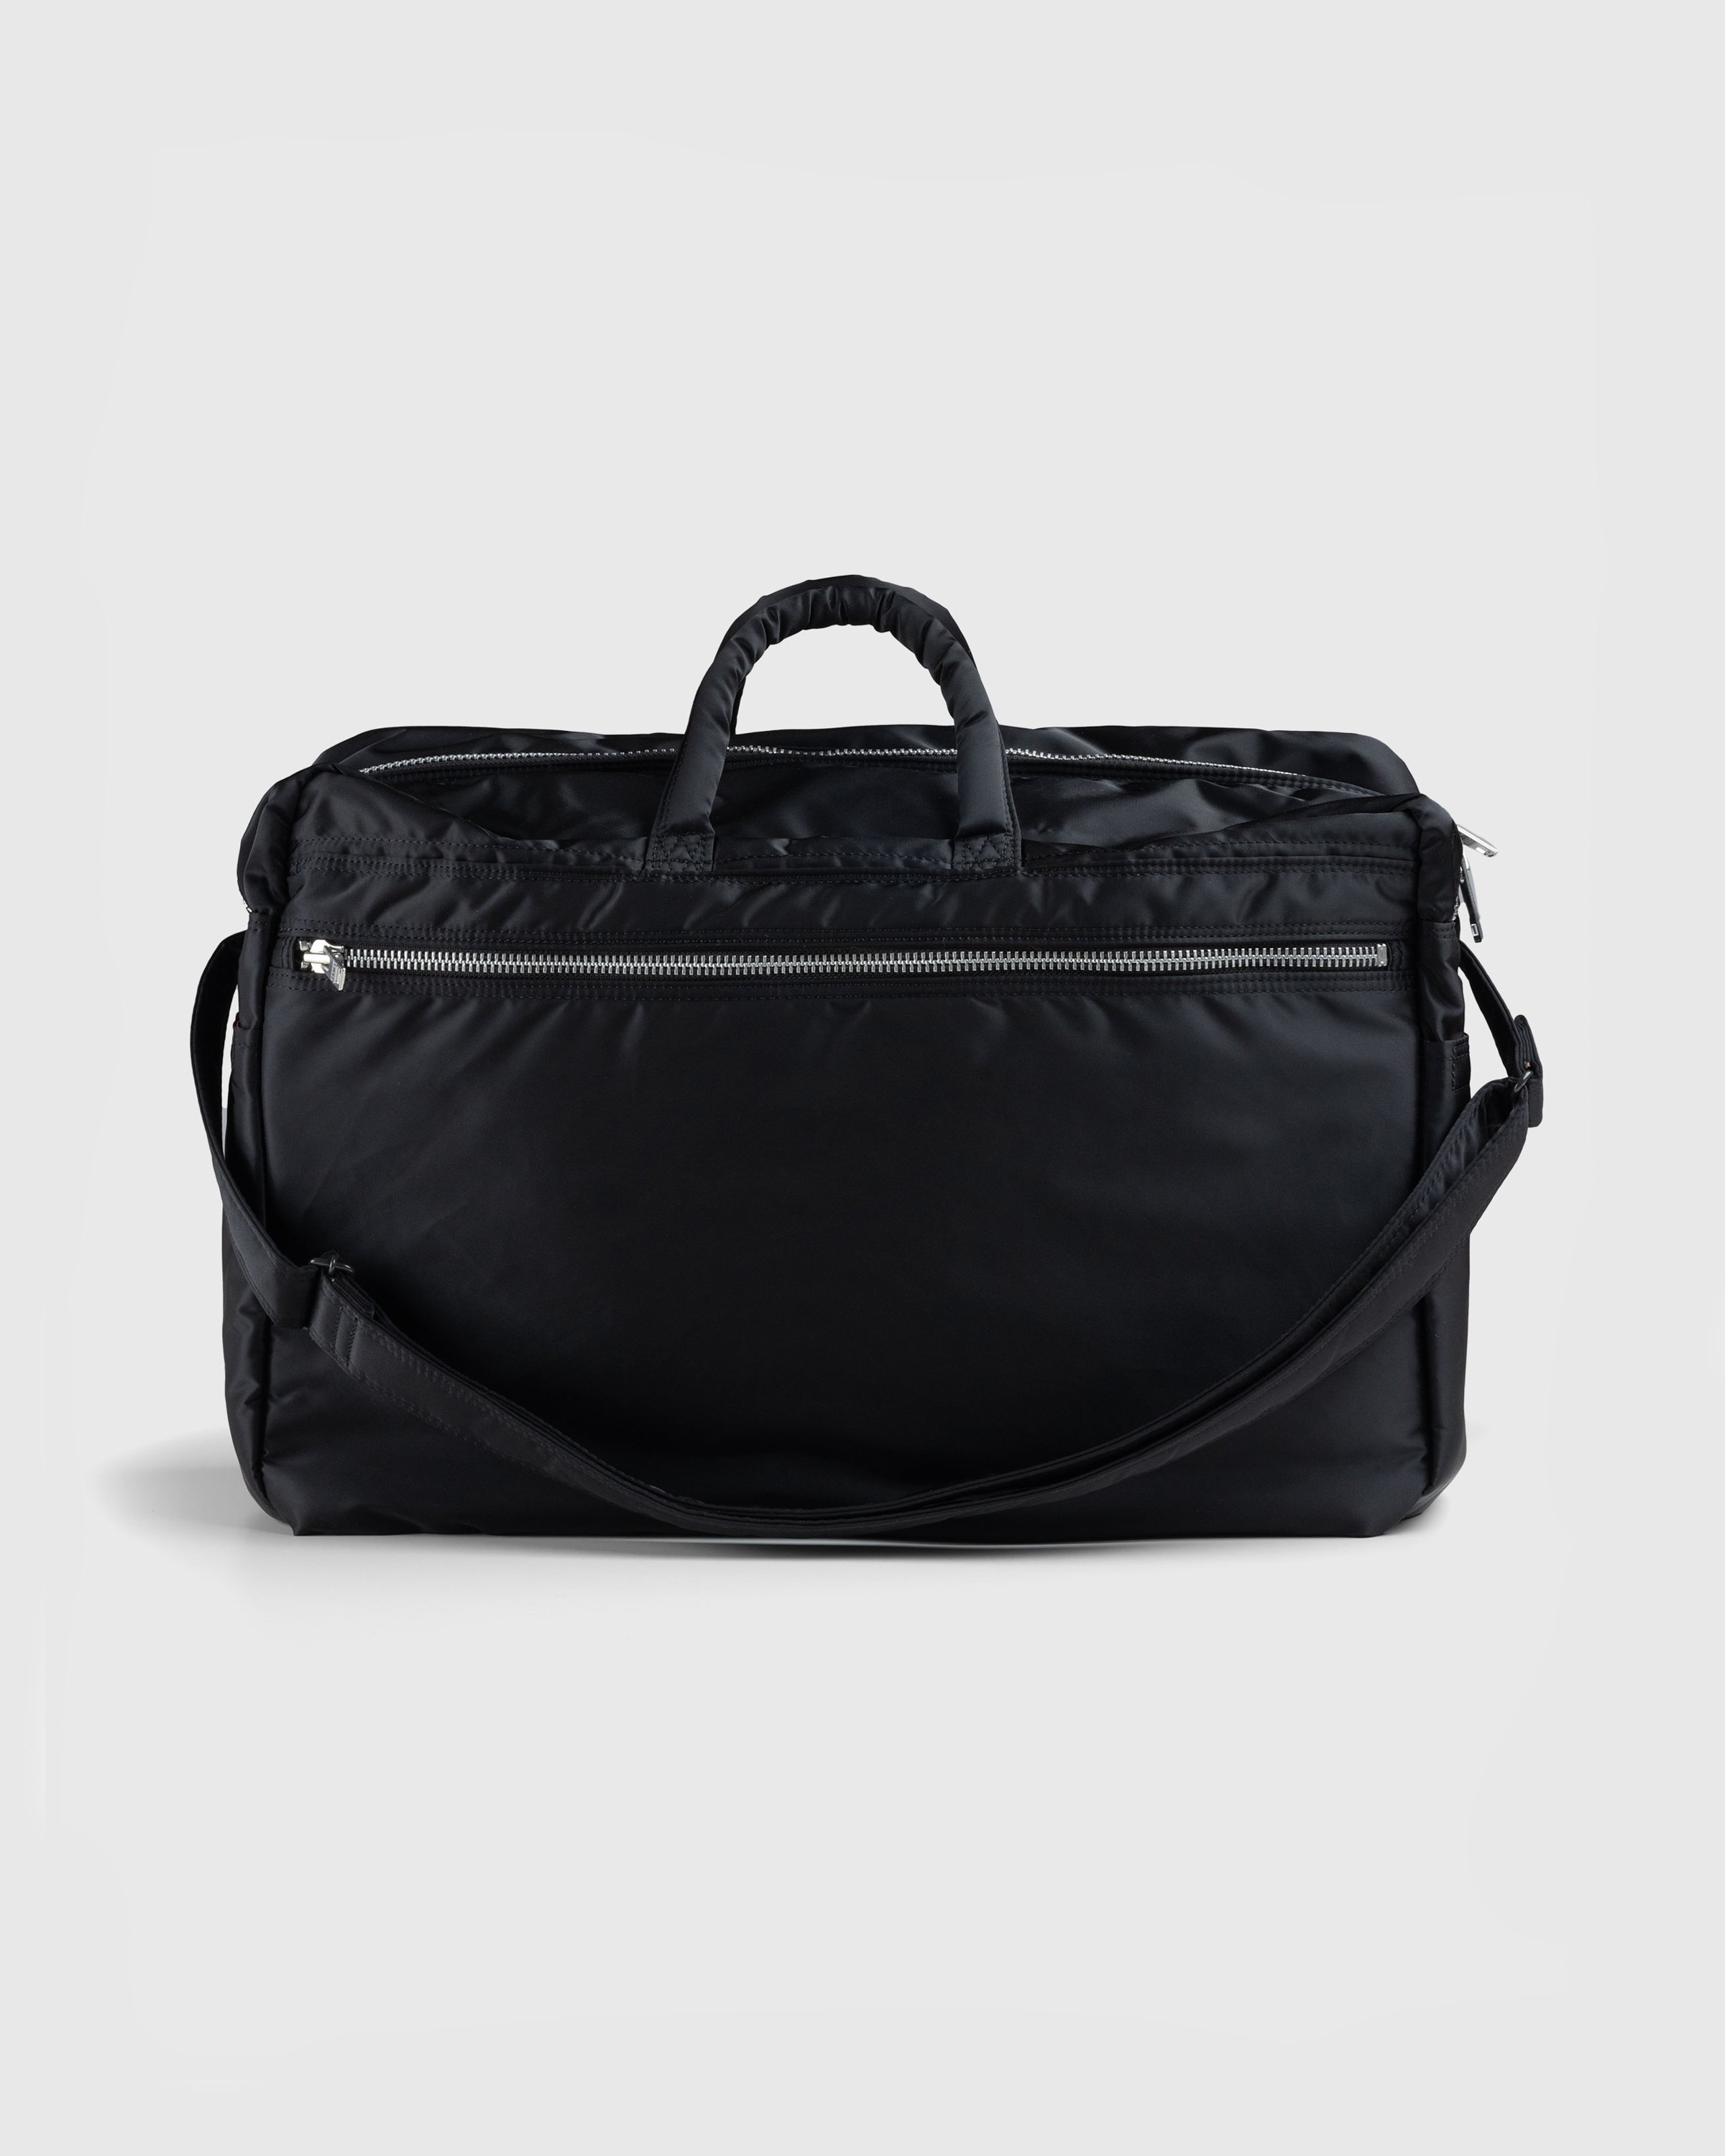 Porter-Yoshida & Co. - TANKER 2WAY DUFFLE BAG (S) - Accessories - Black - Image 2